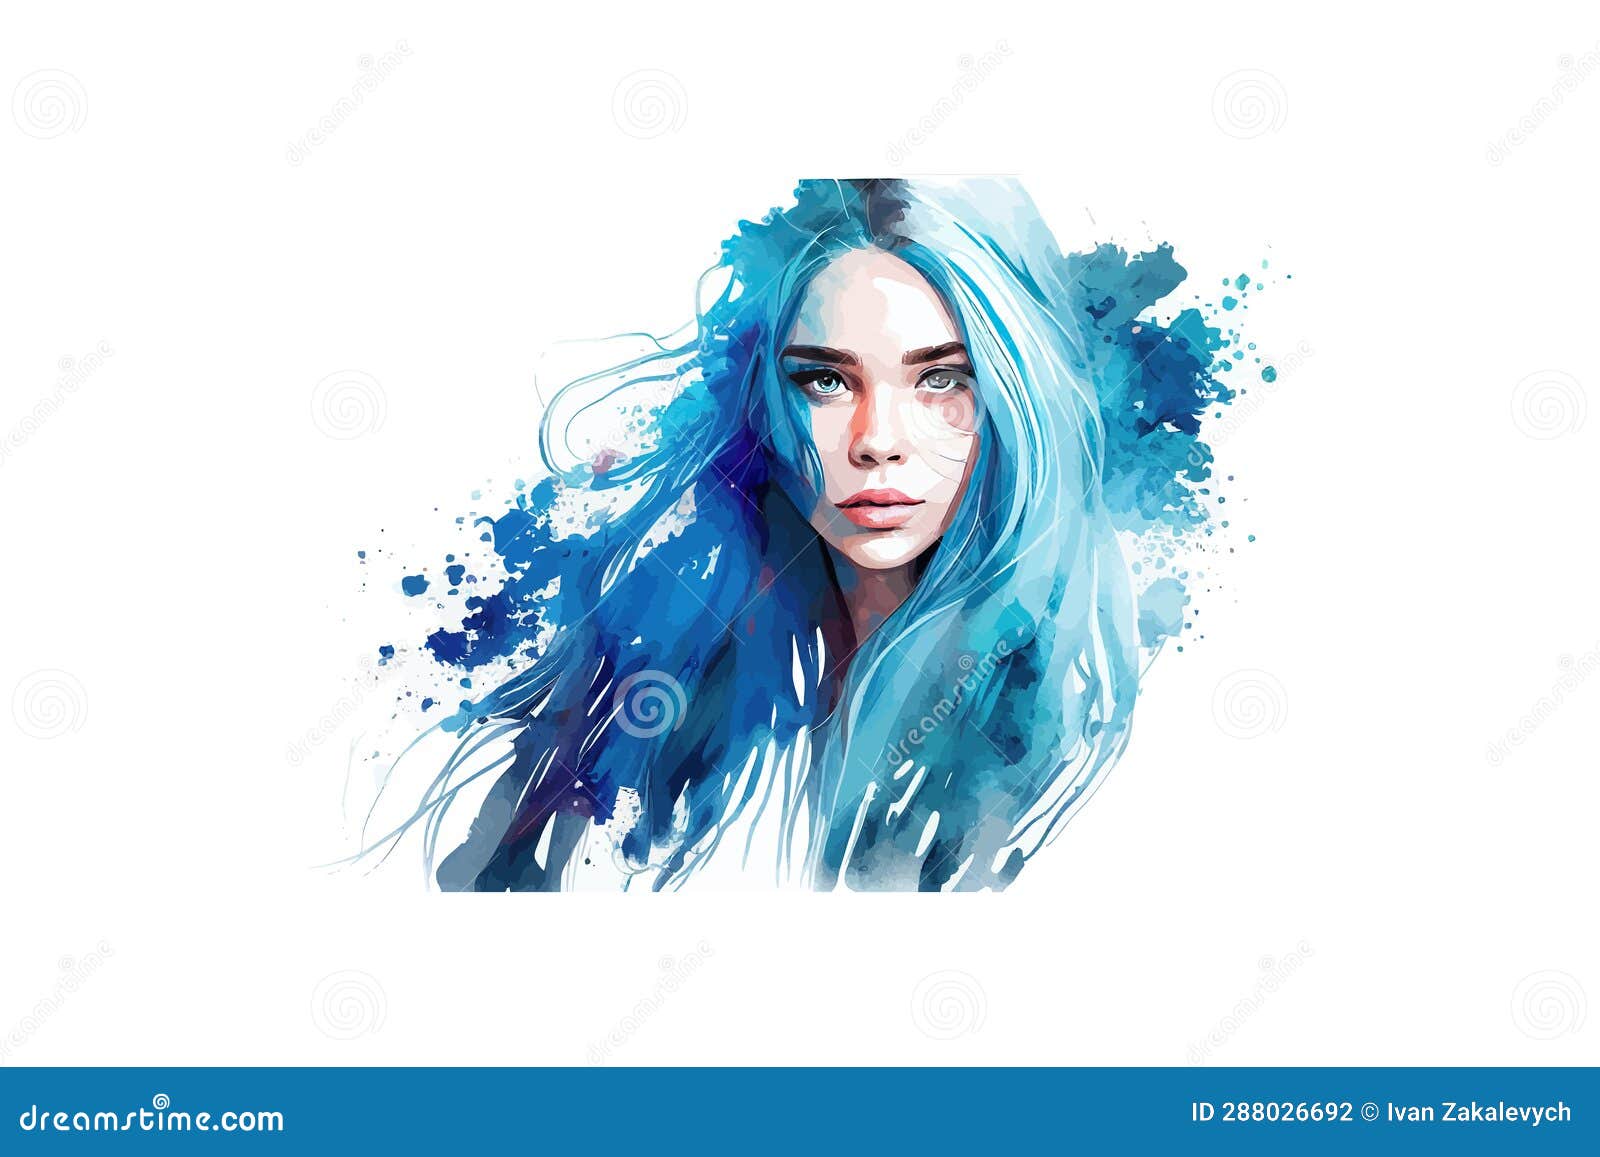 "Illustration"
3. "Blue-haired girl portrait" - wide 3